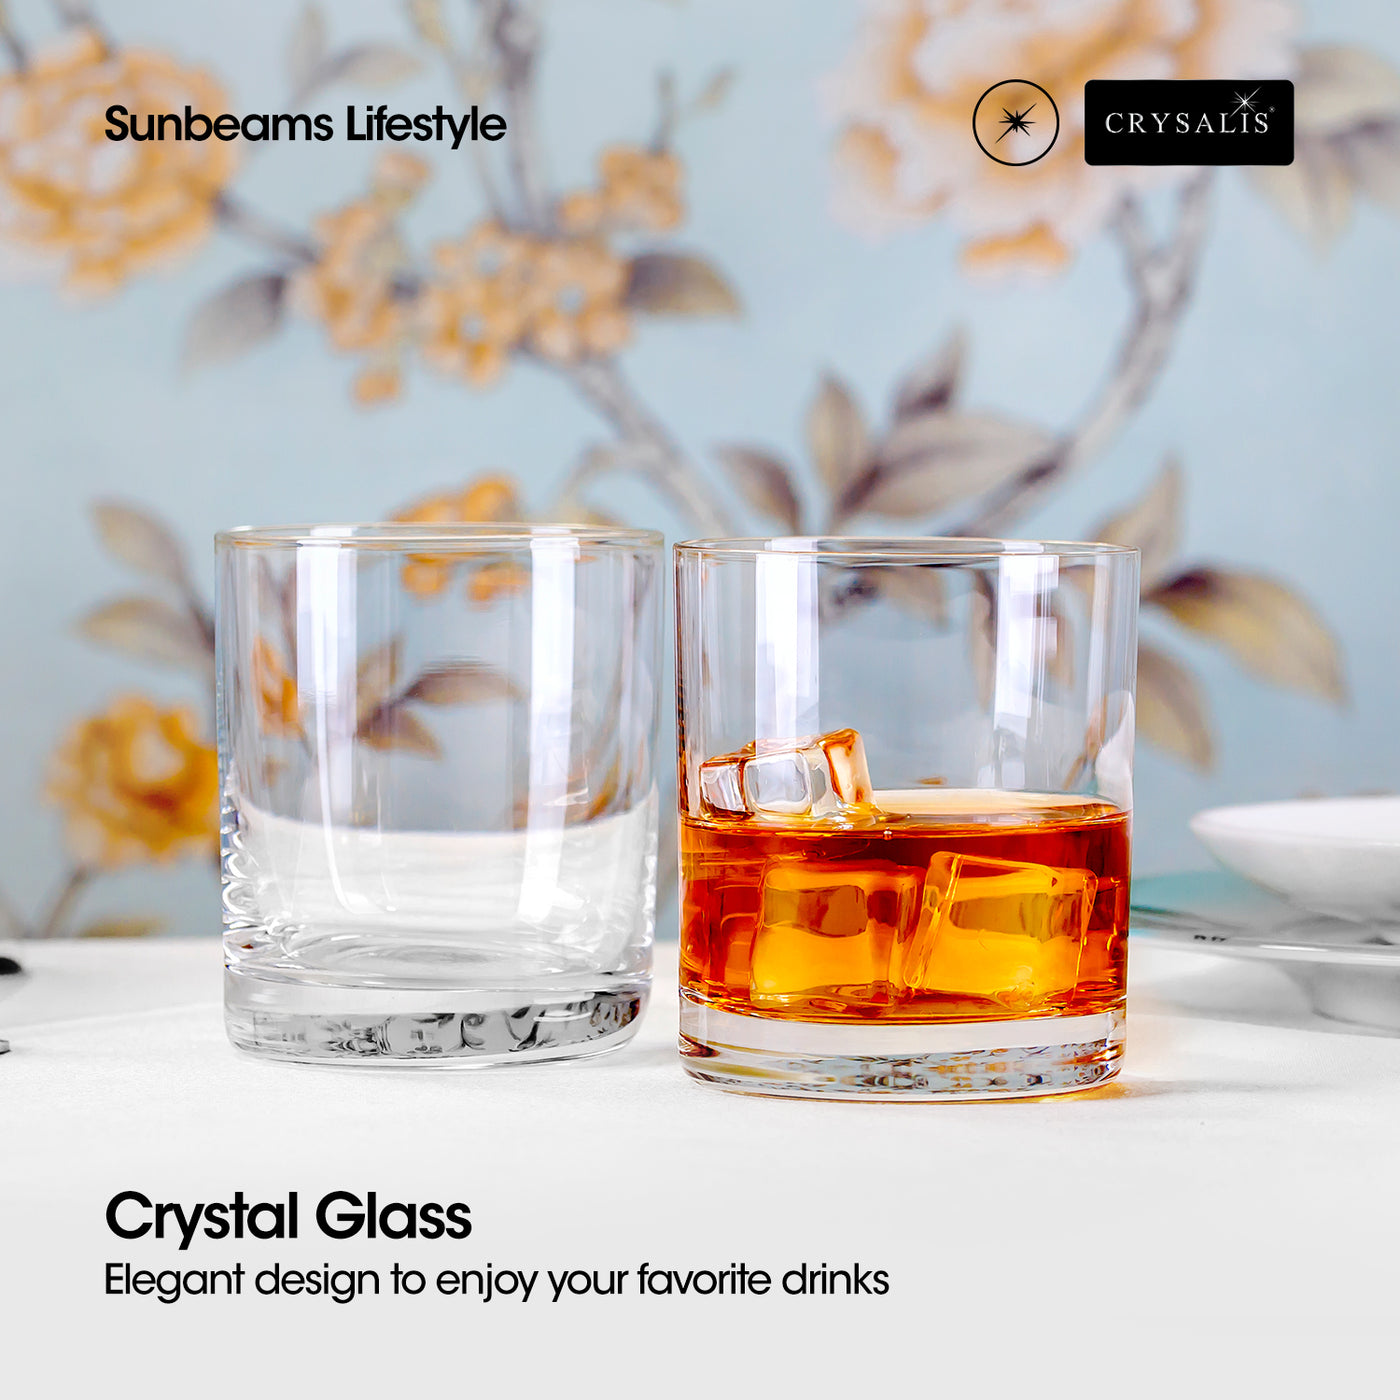 CRYSALIS Rock Glass Set of 2 | 300ml Drinking Glass